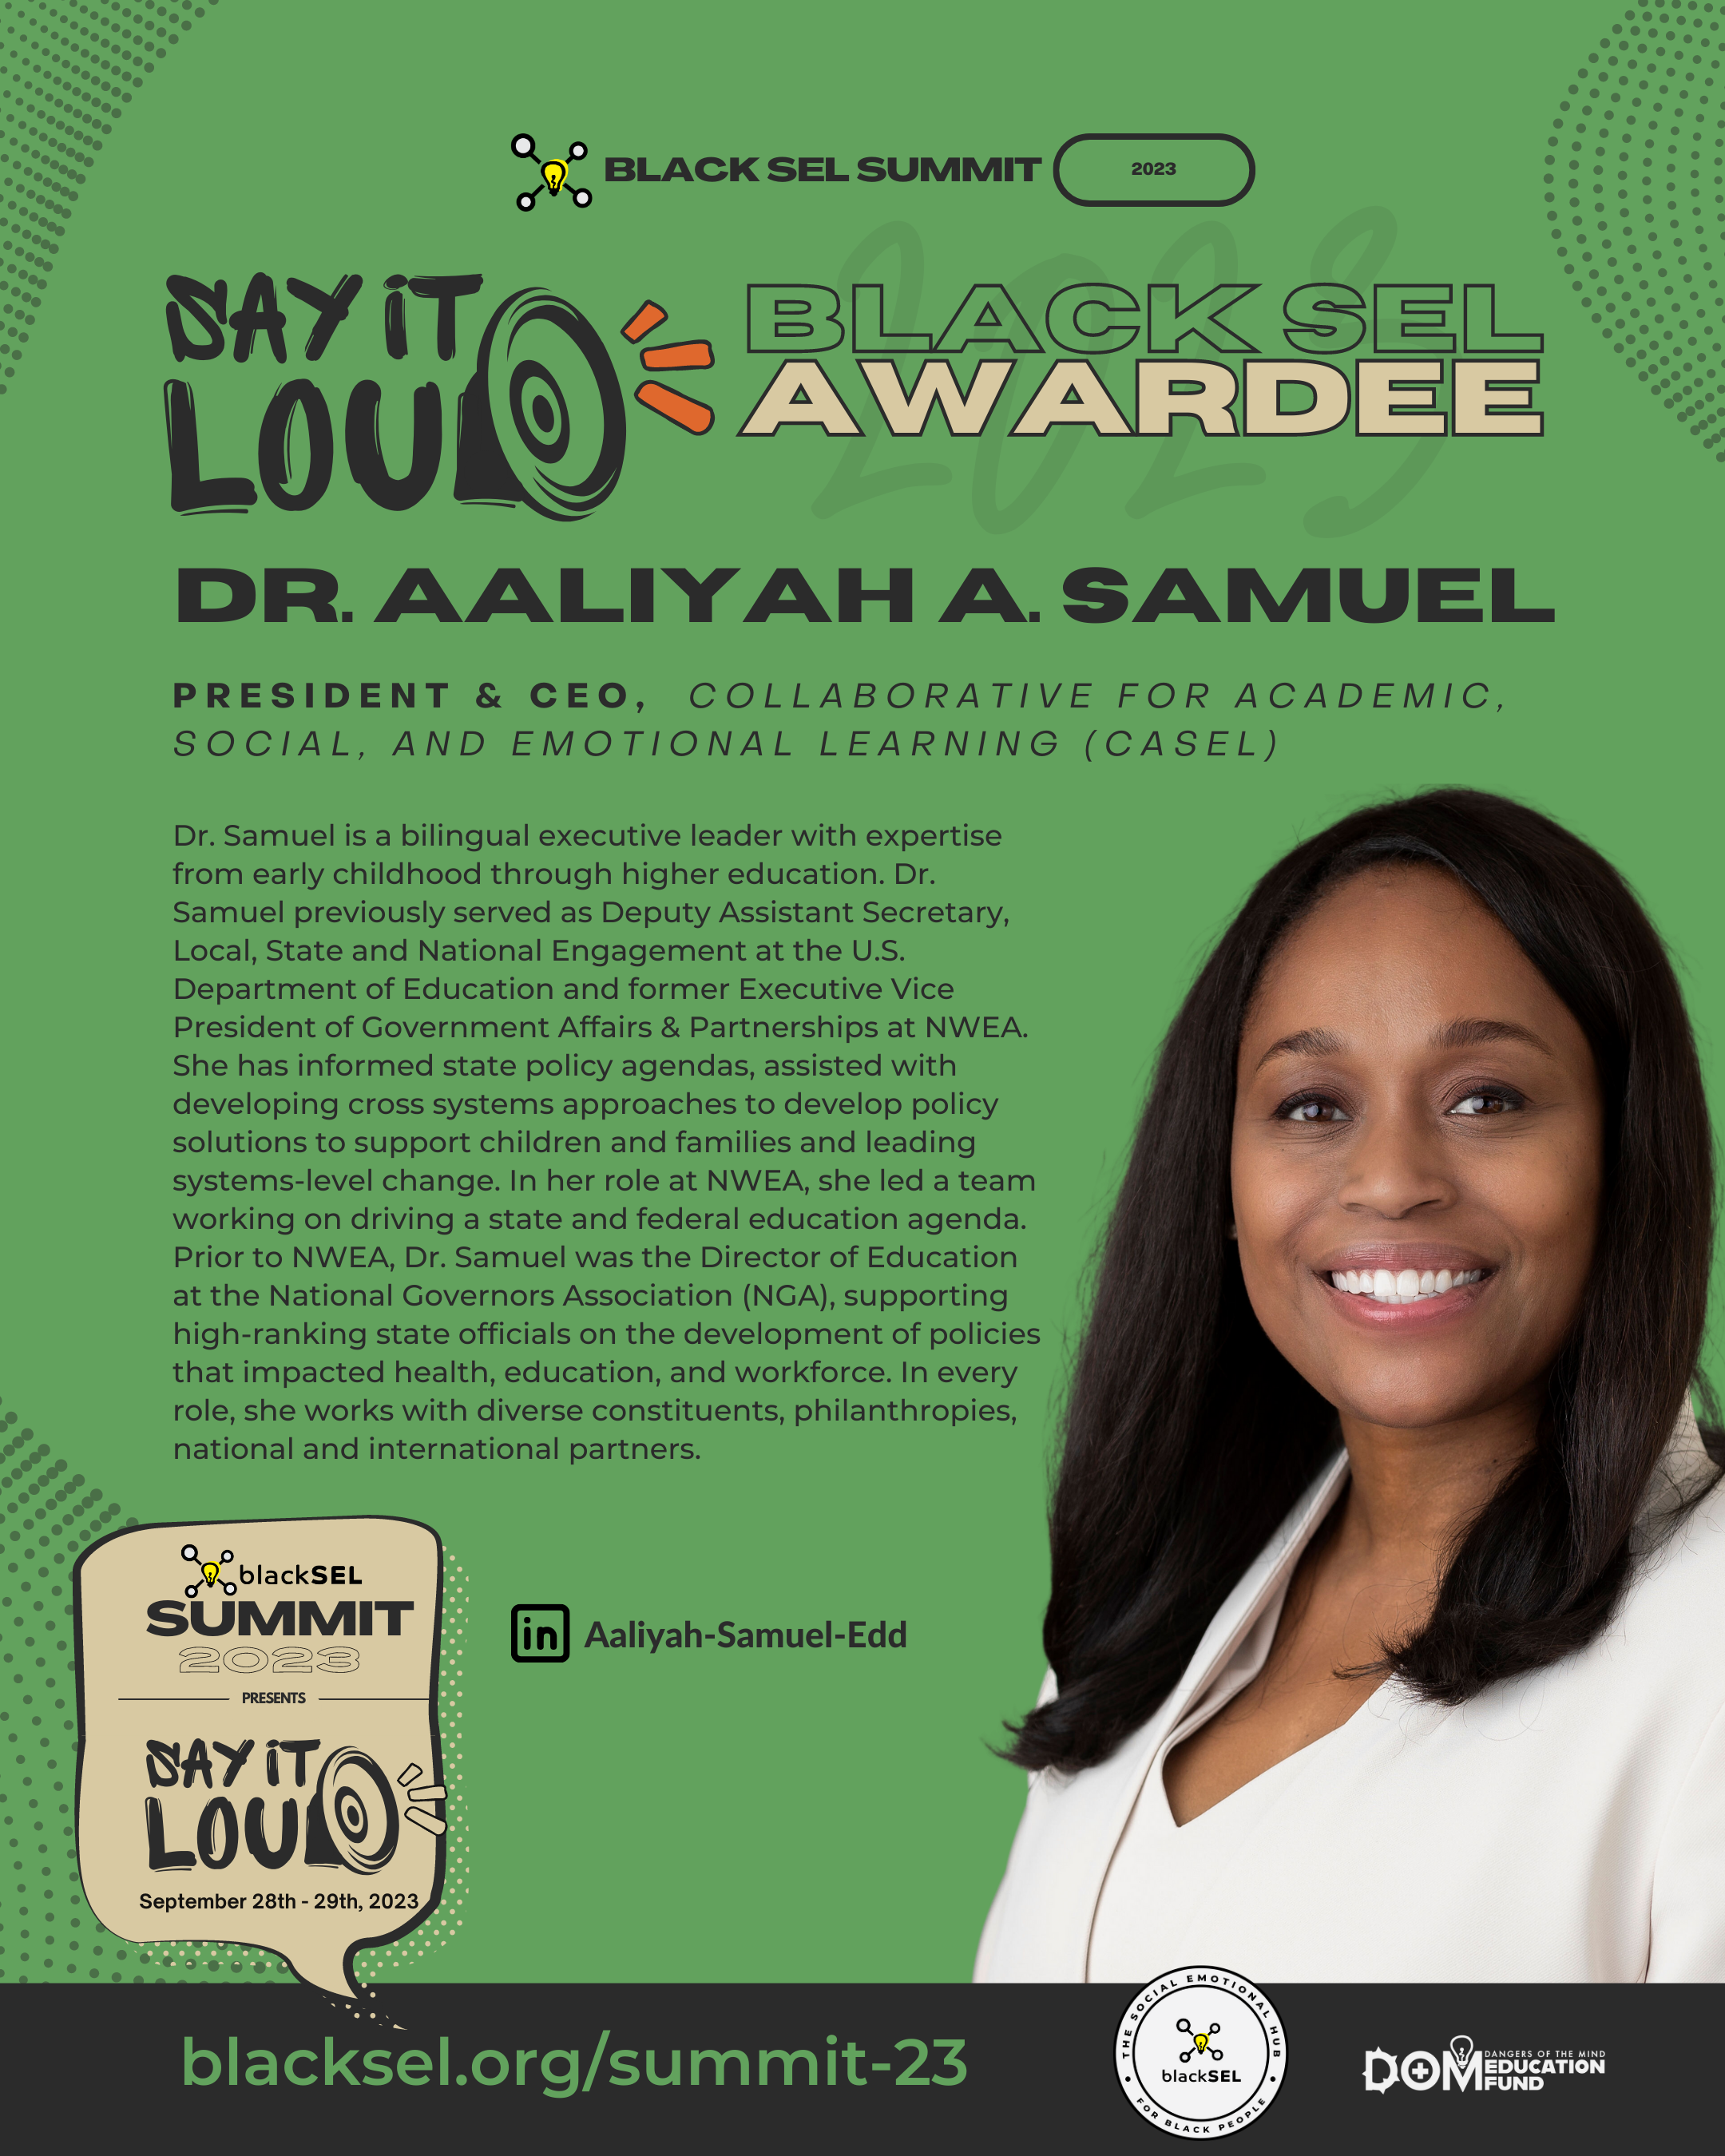 Dr. Aaliyah Samuel